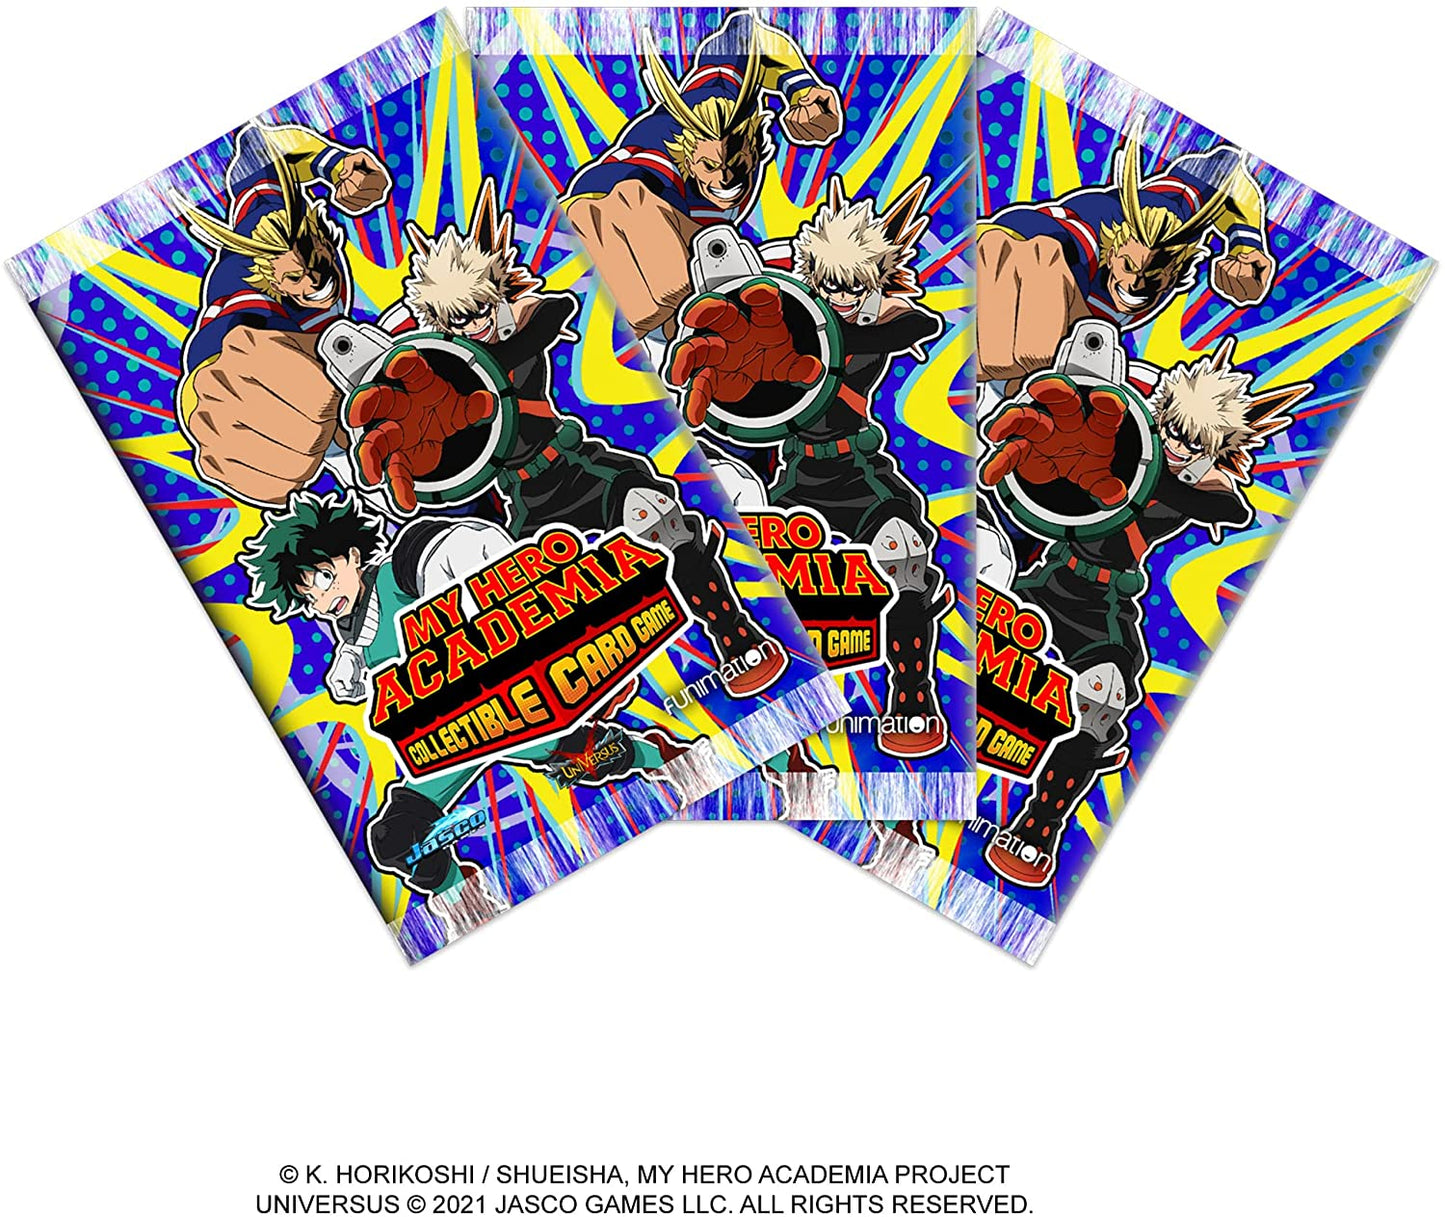 My Hero Academia Juego de cartas coleccionables Serie 1 Unlimited Booster Pack (1 paquete)